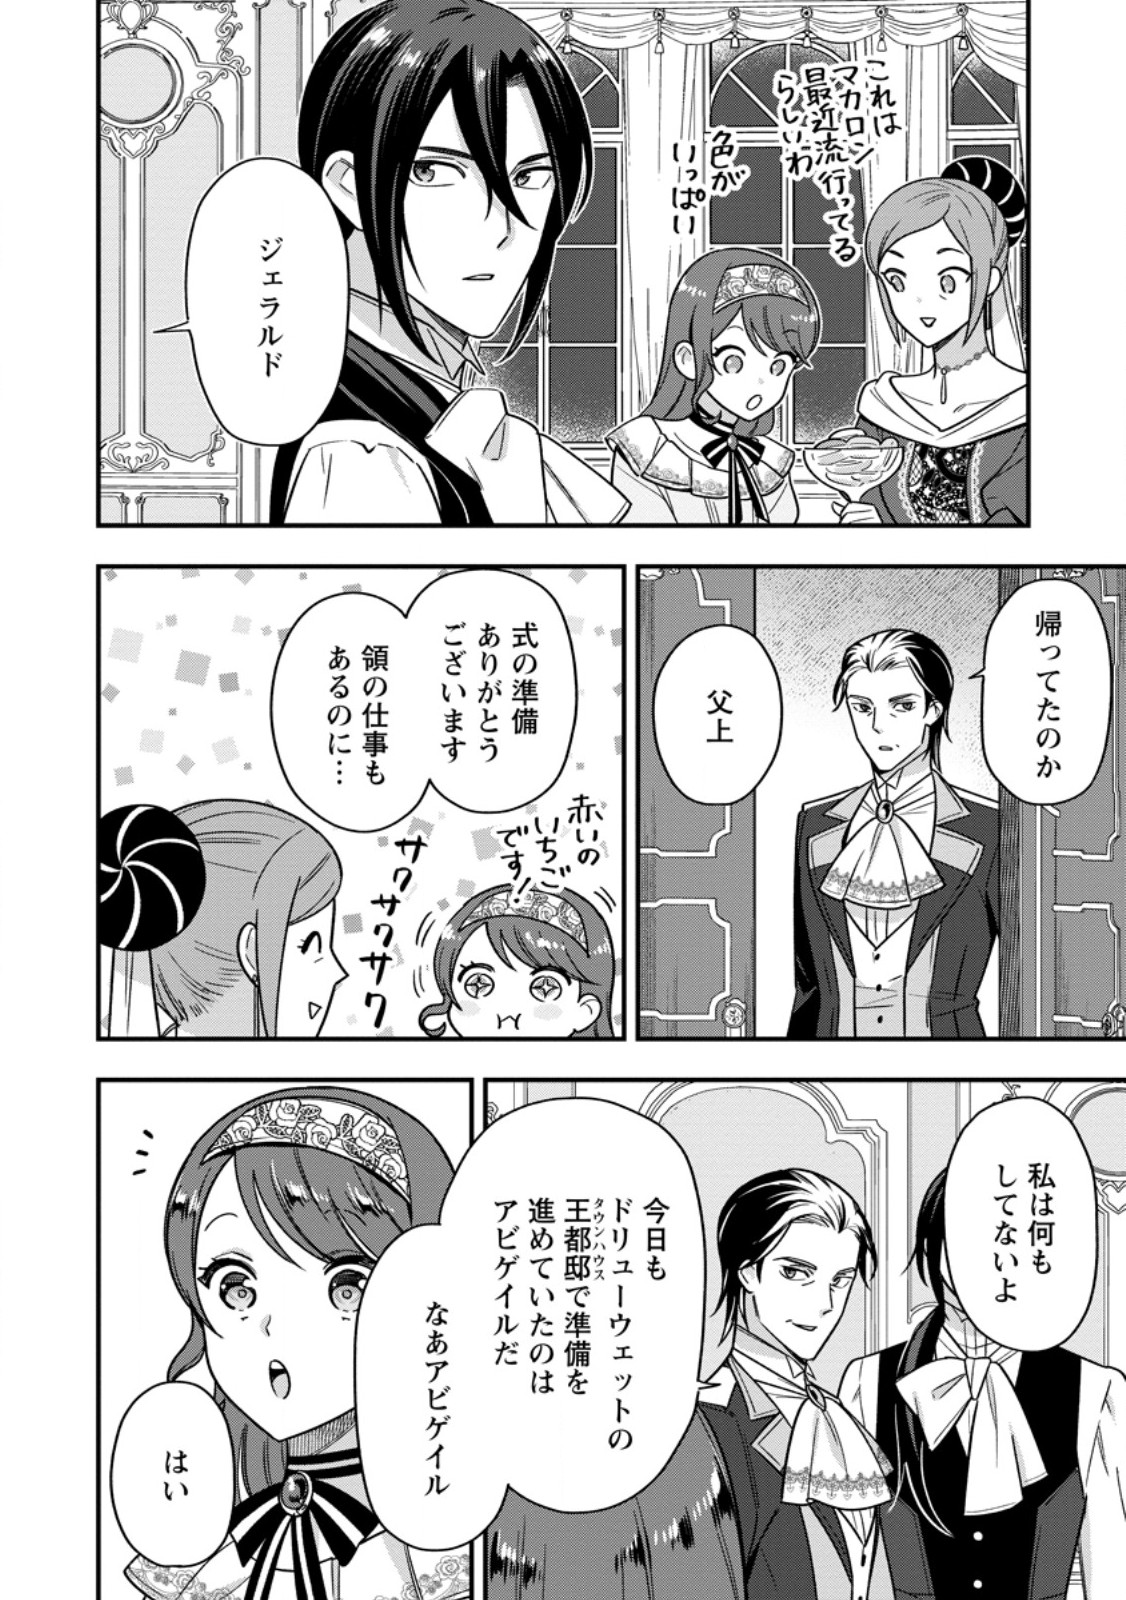 Aisanai to Iwaremashite mo - Chapter 9.3 - Page 2